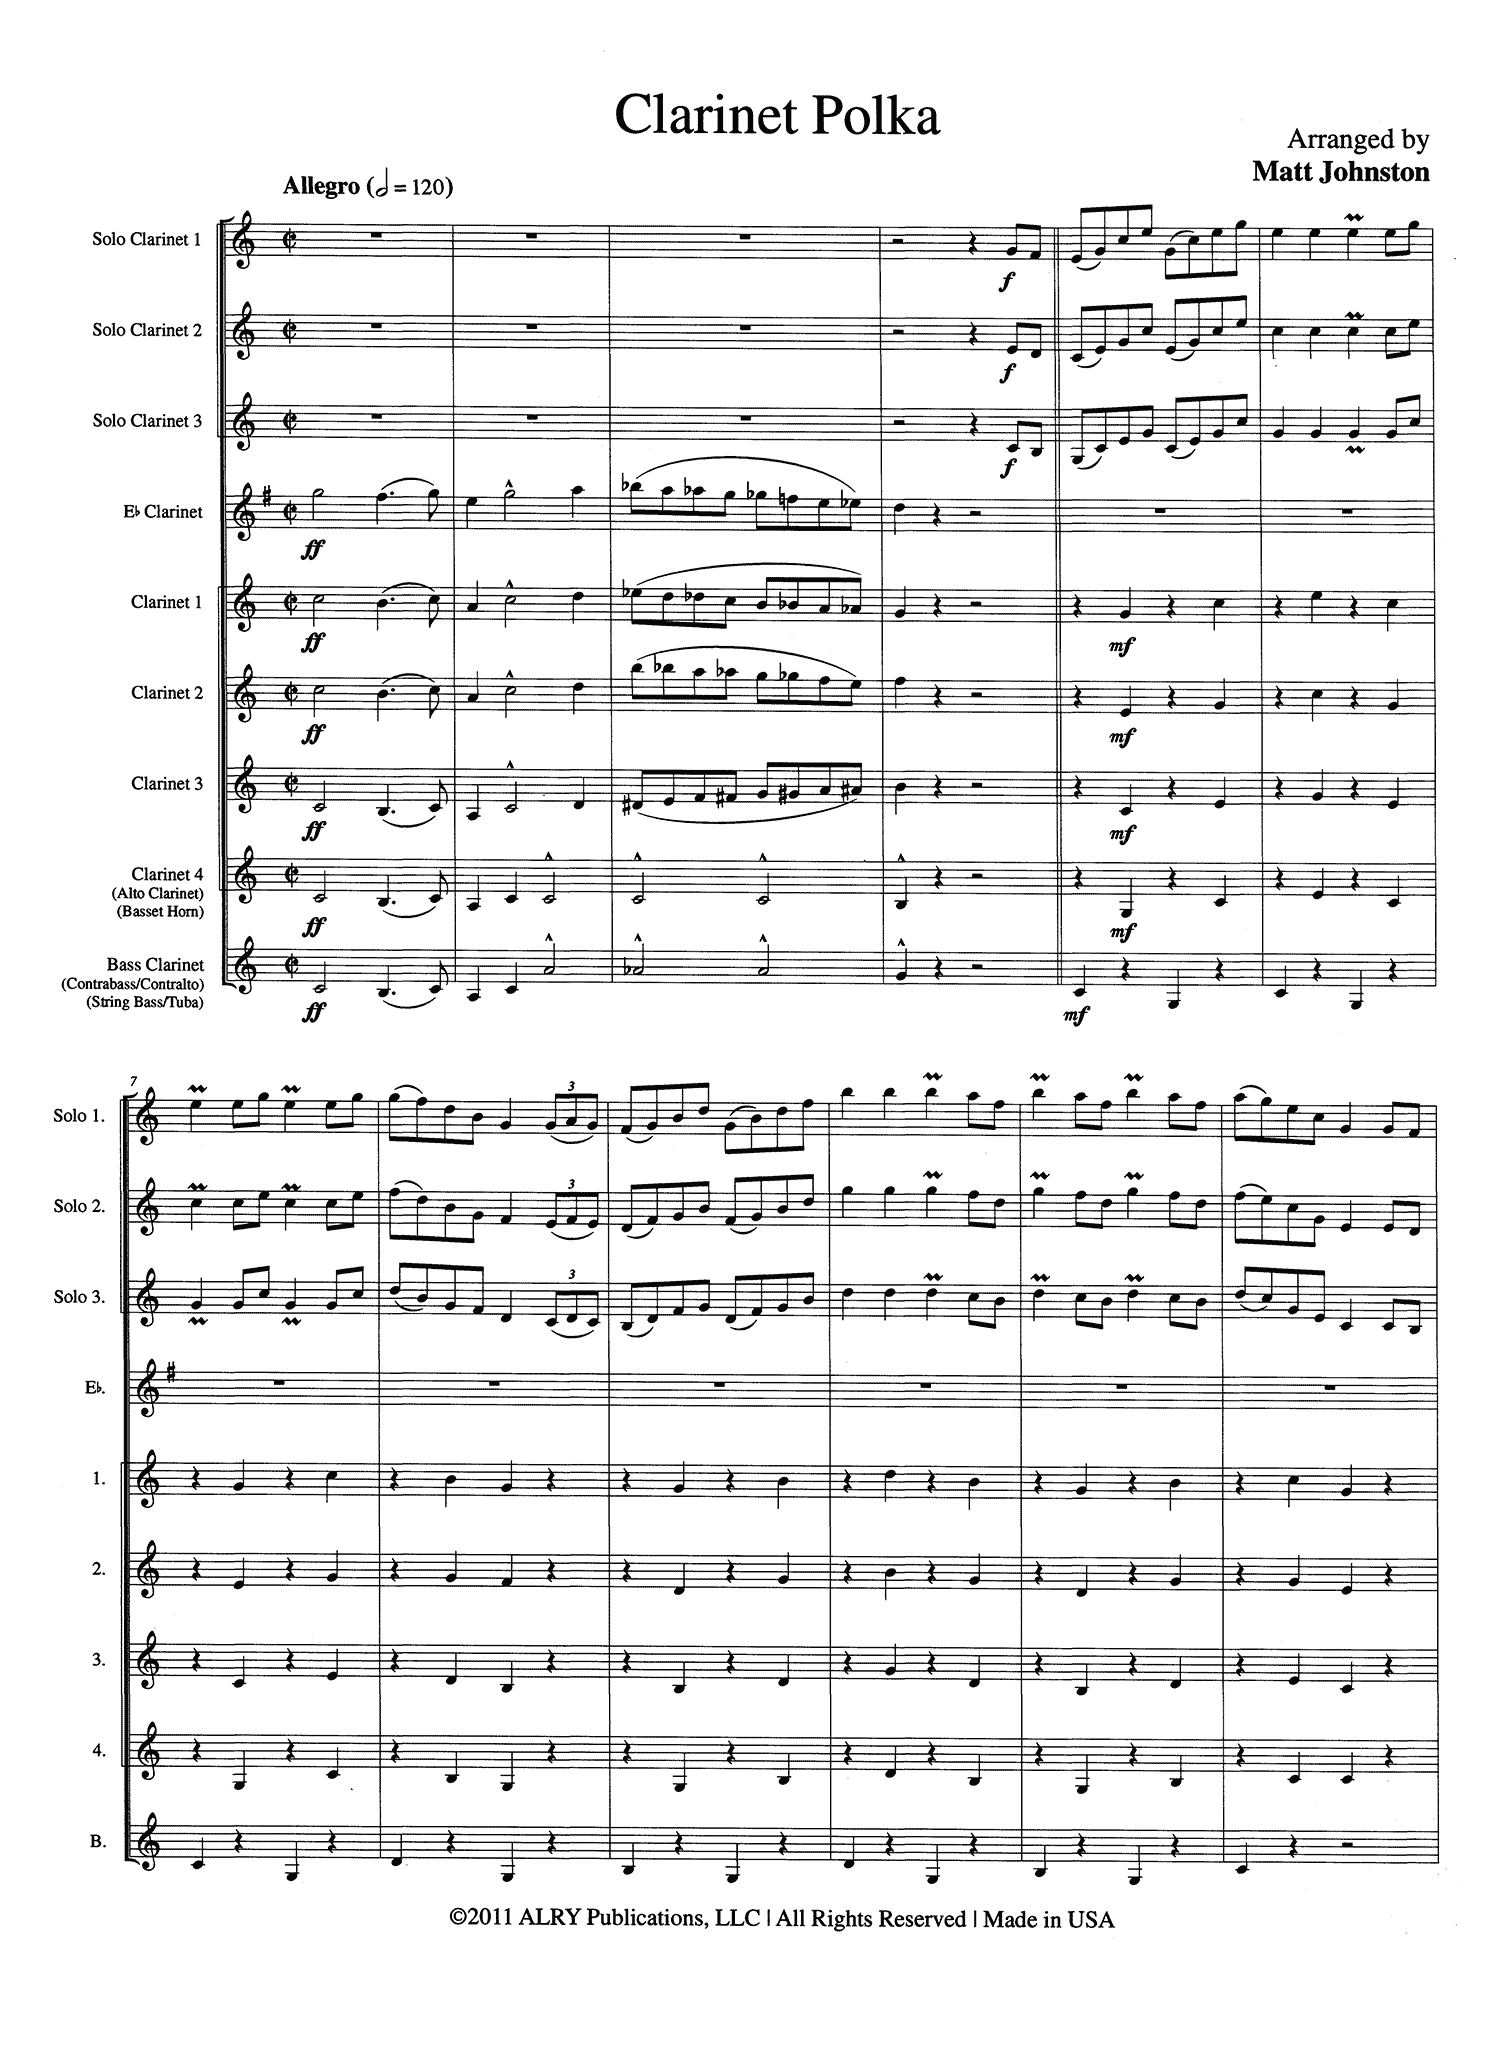 Johnston Clarinet Polka Score